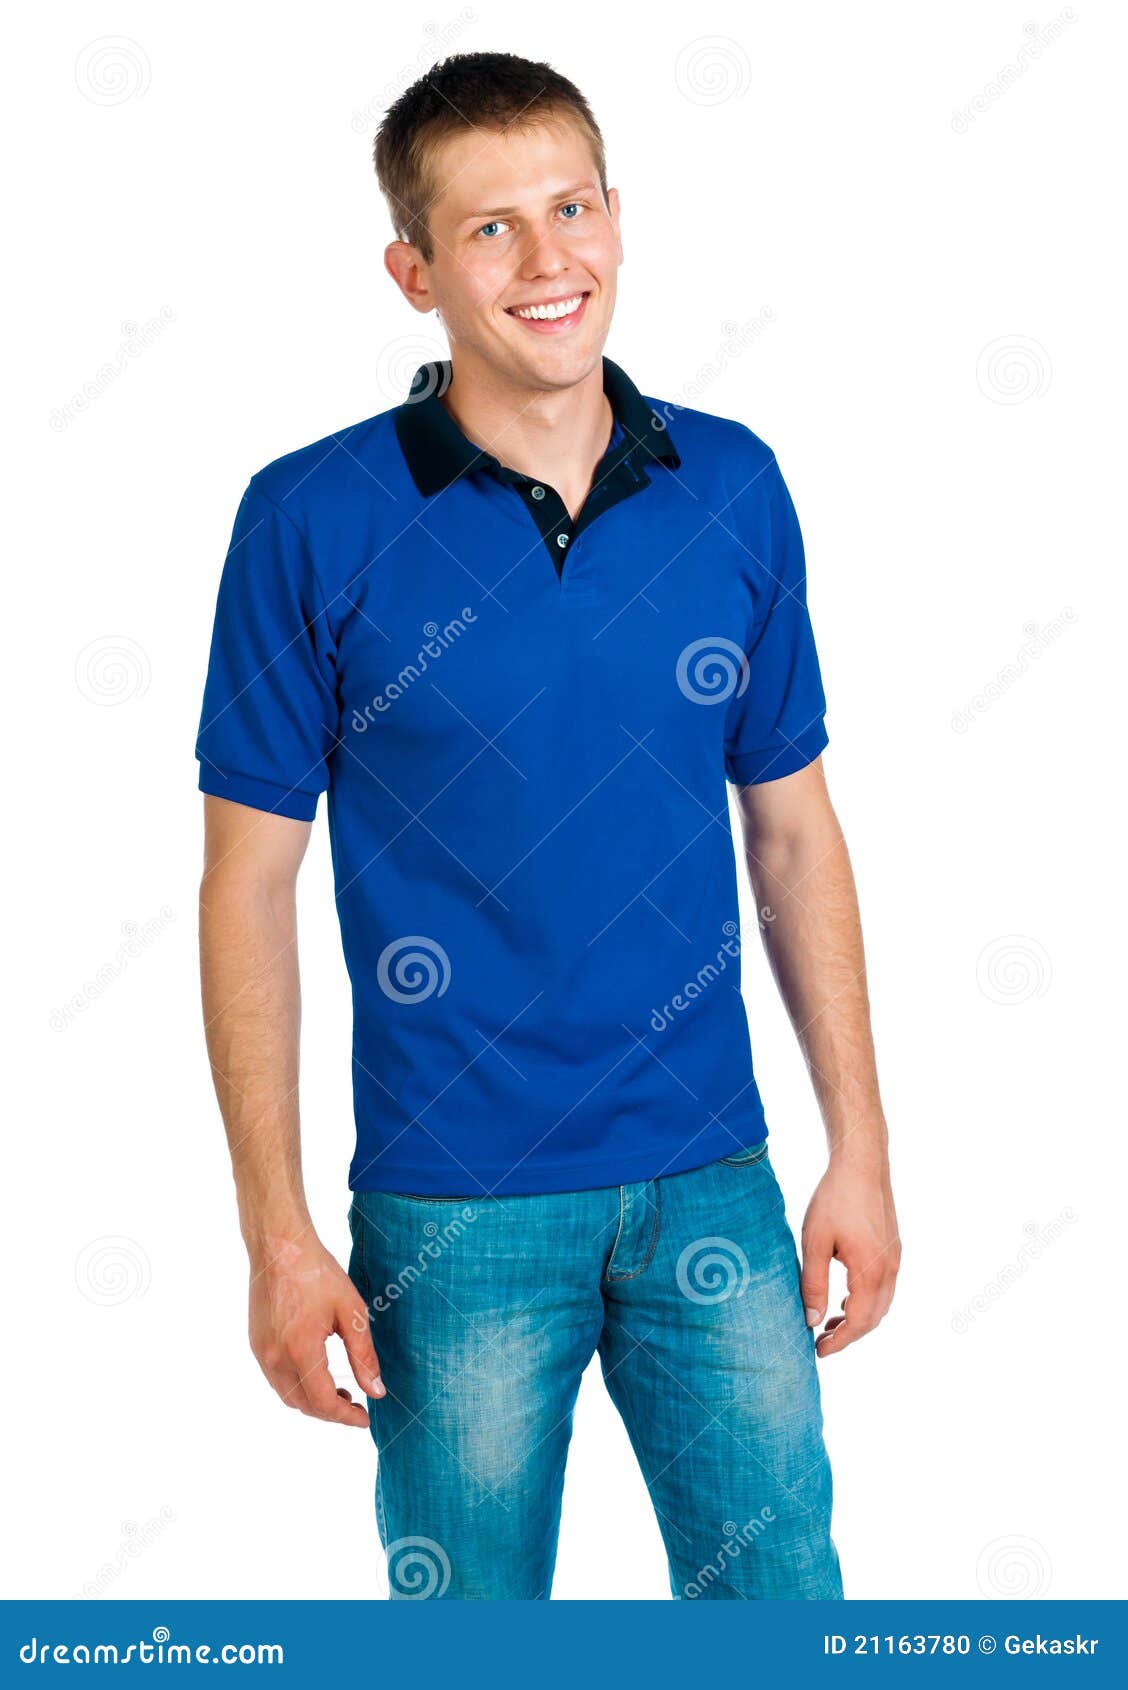 man in blue uniforme